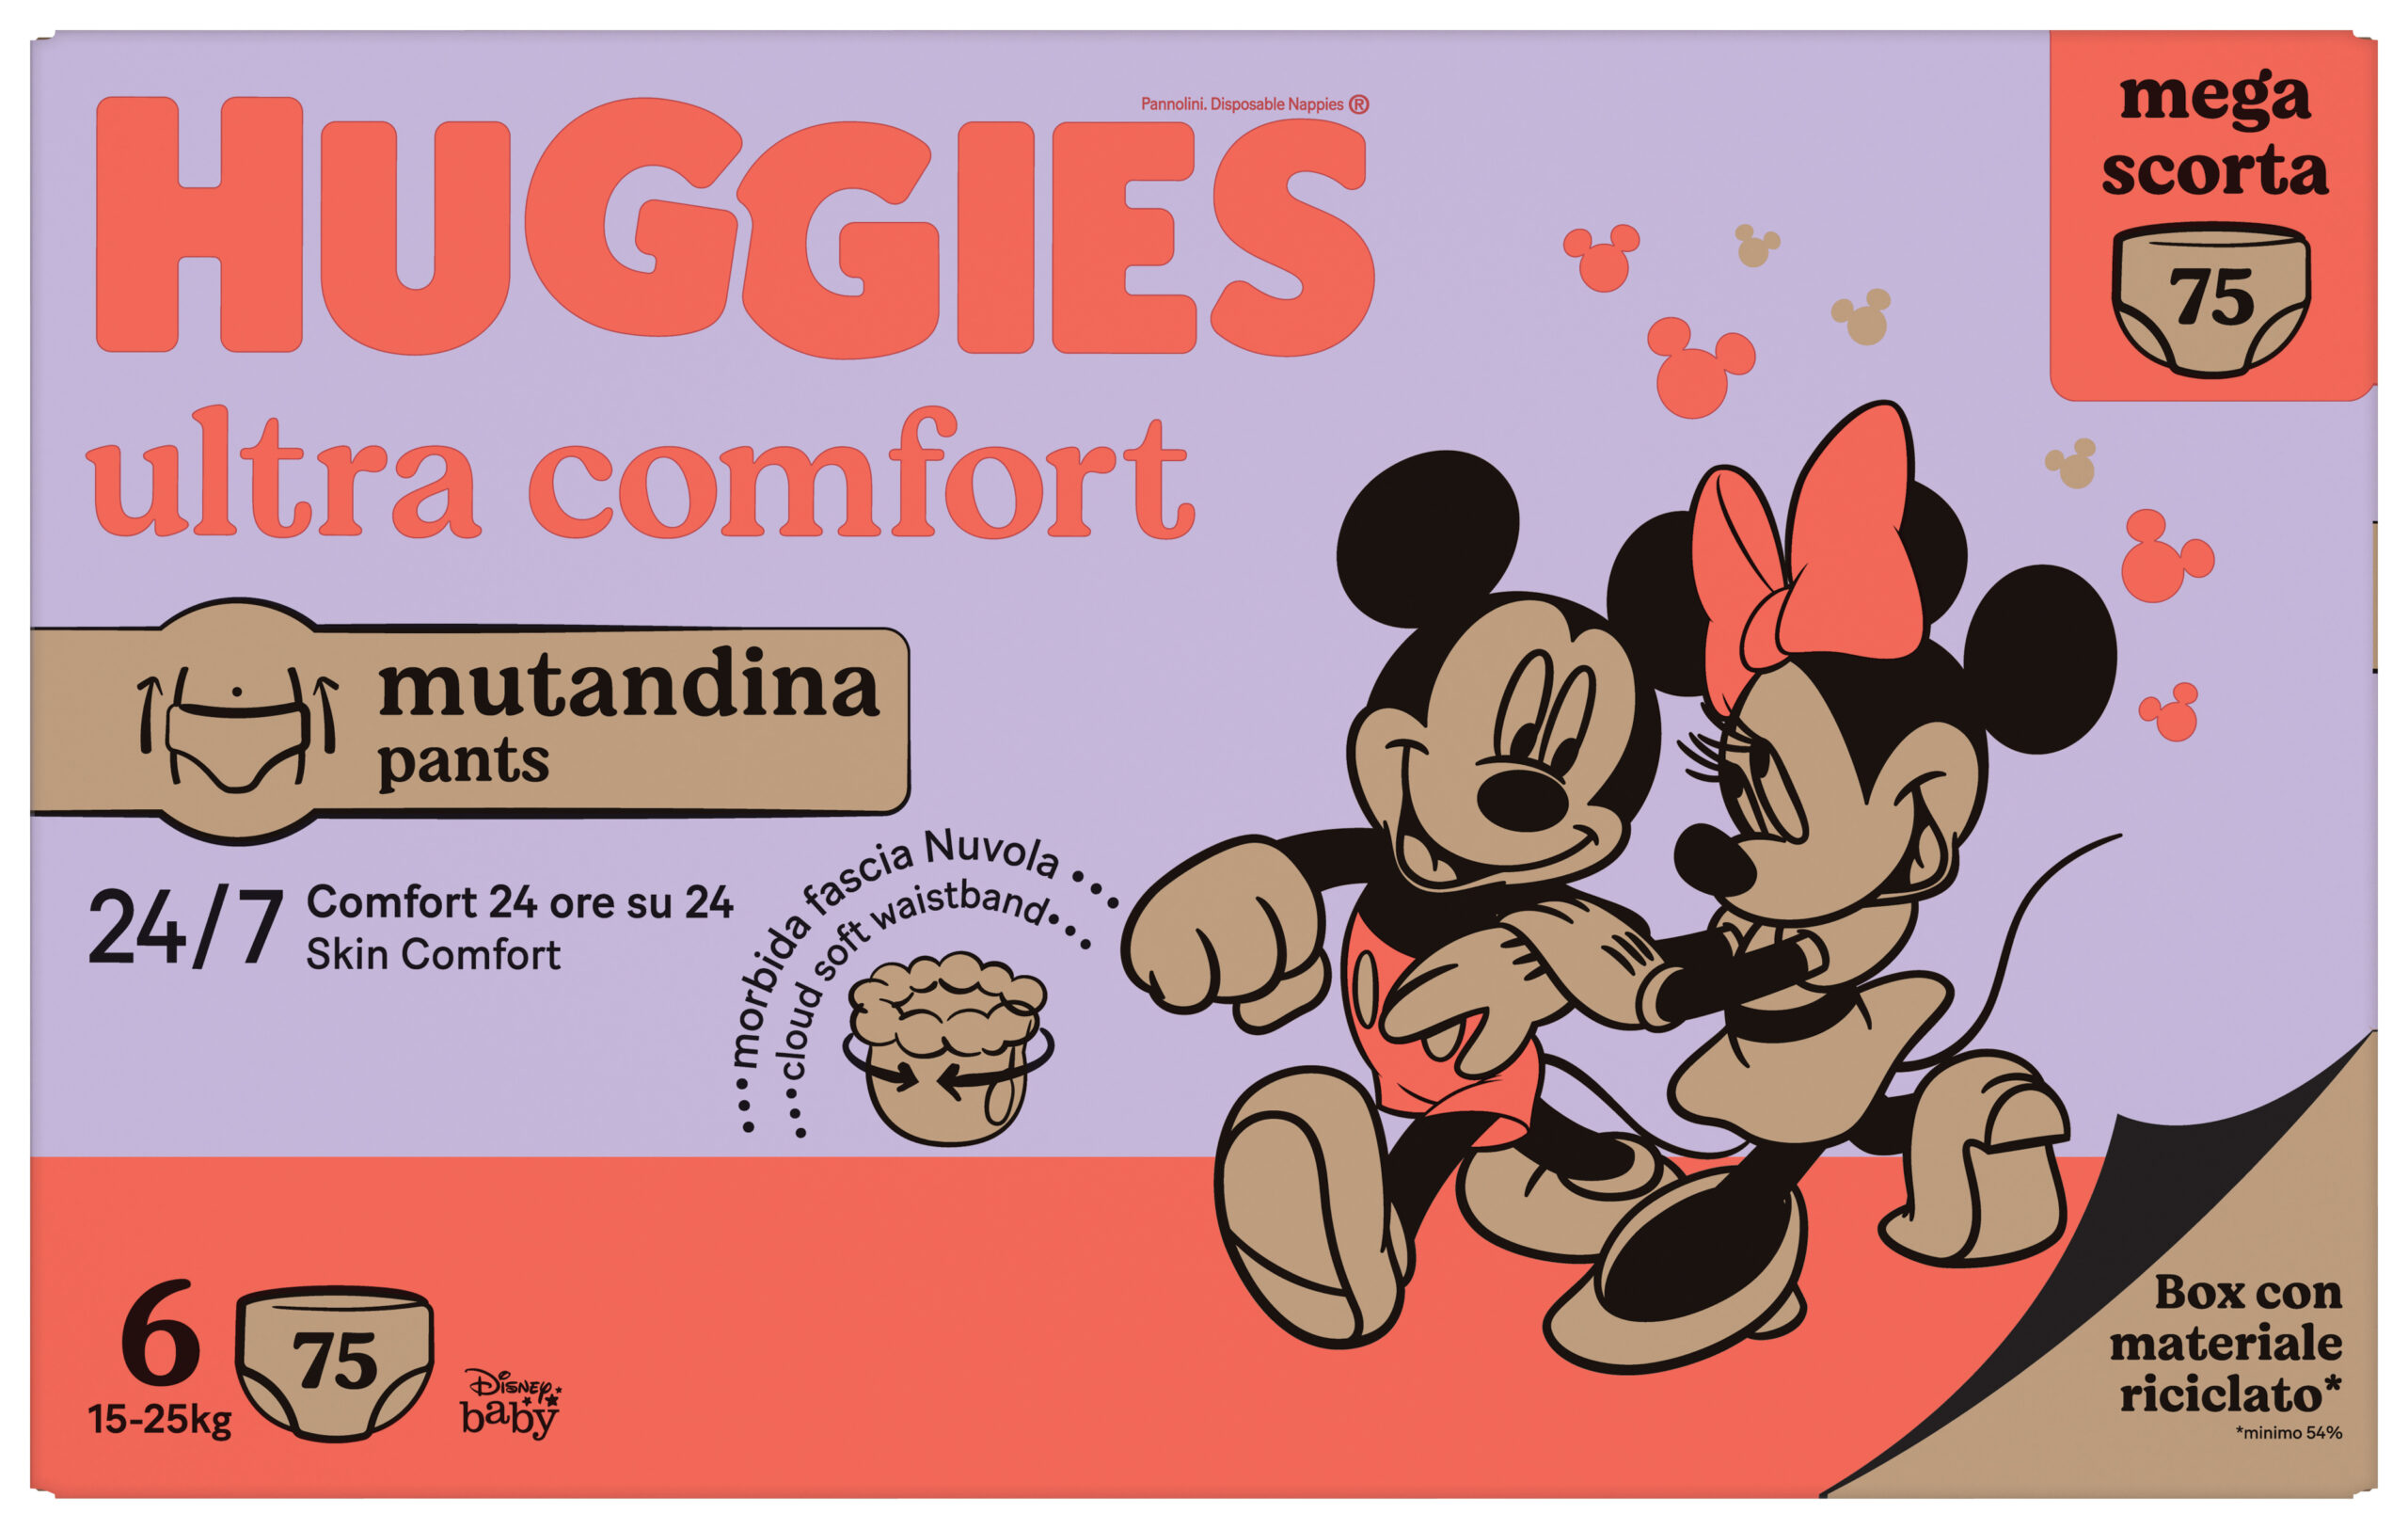 Huggies ultra comfort mutandina megapack tg.6 - 75 pezzi - Huggies